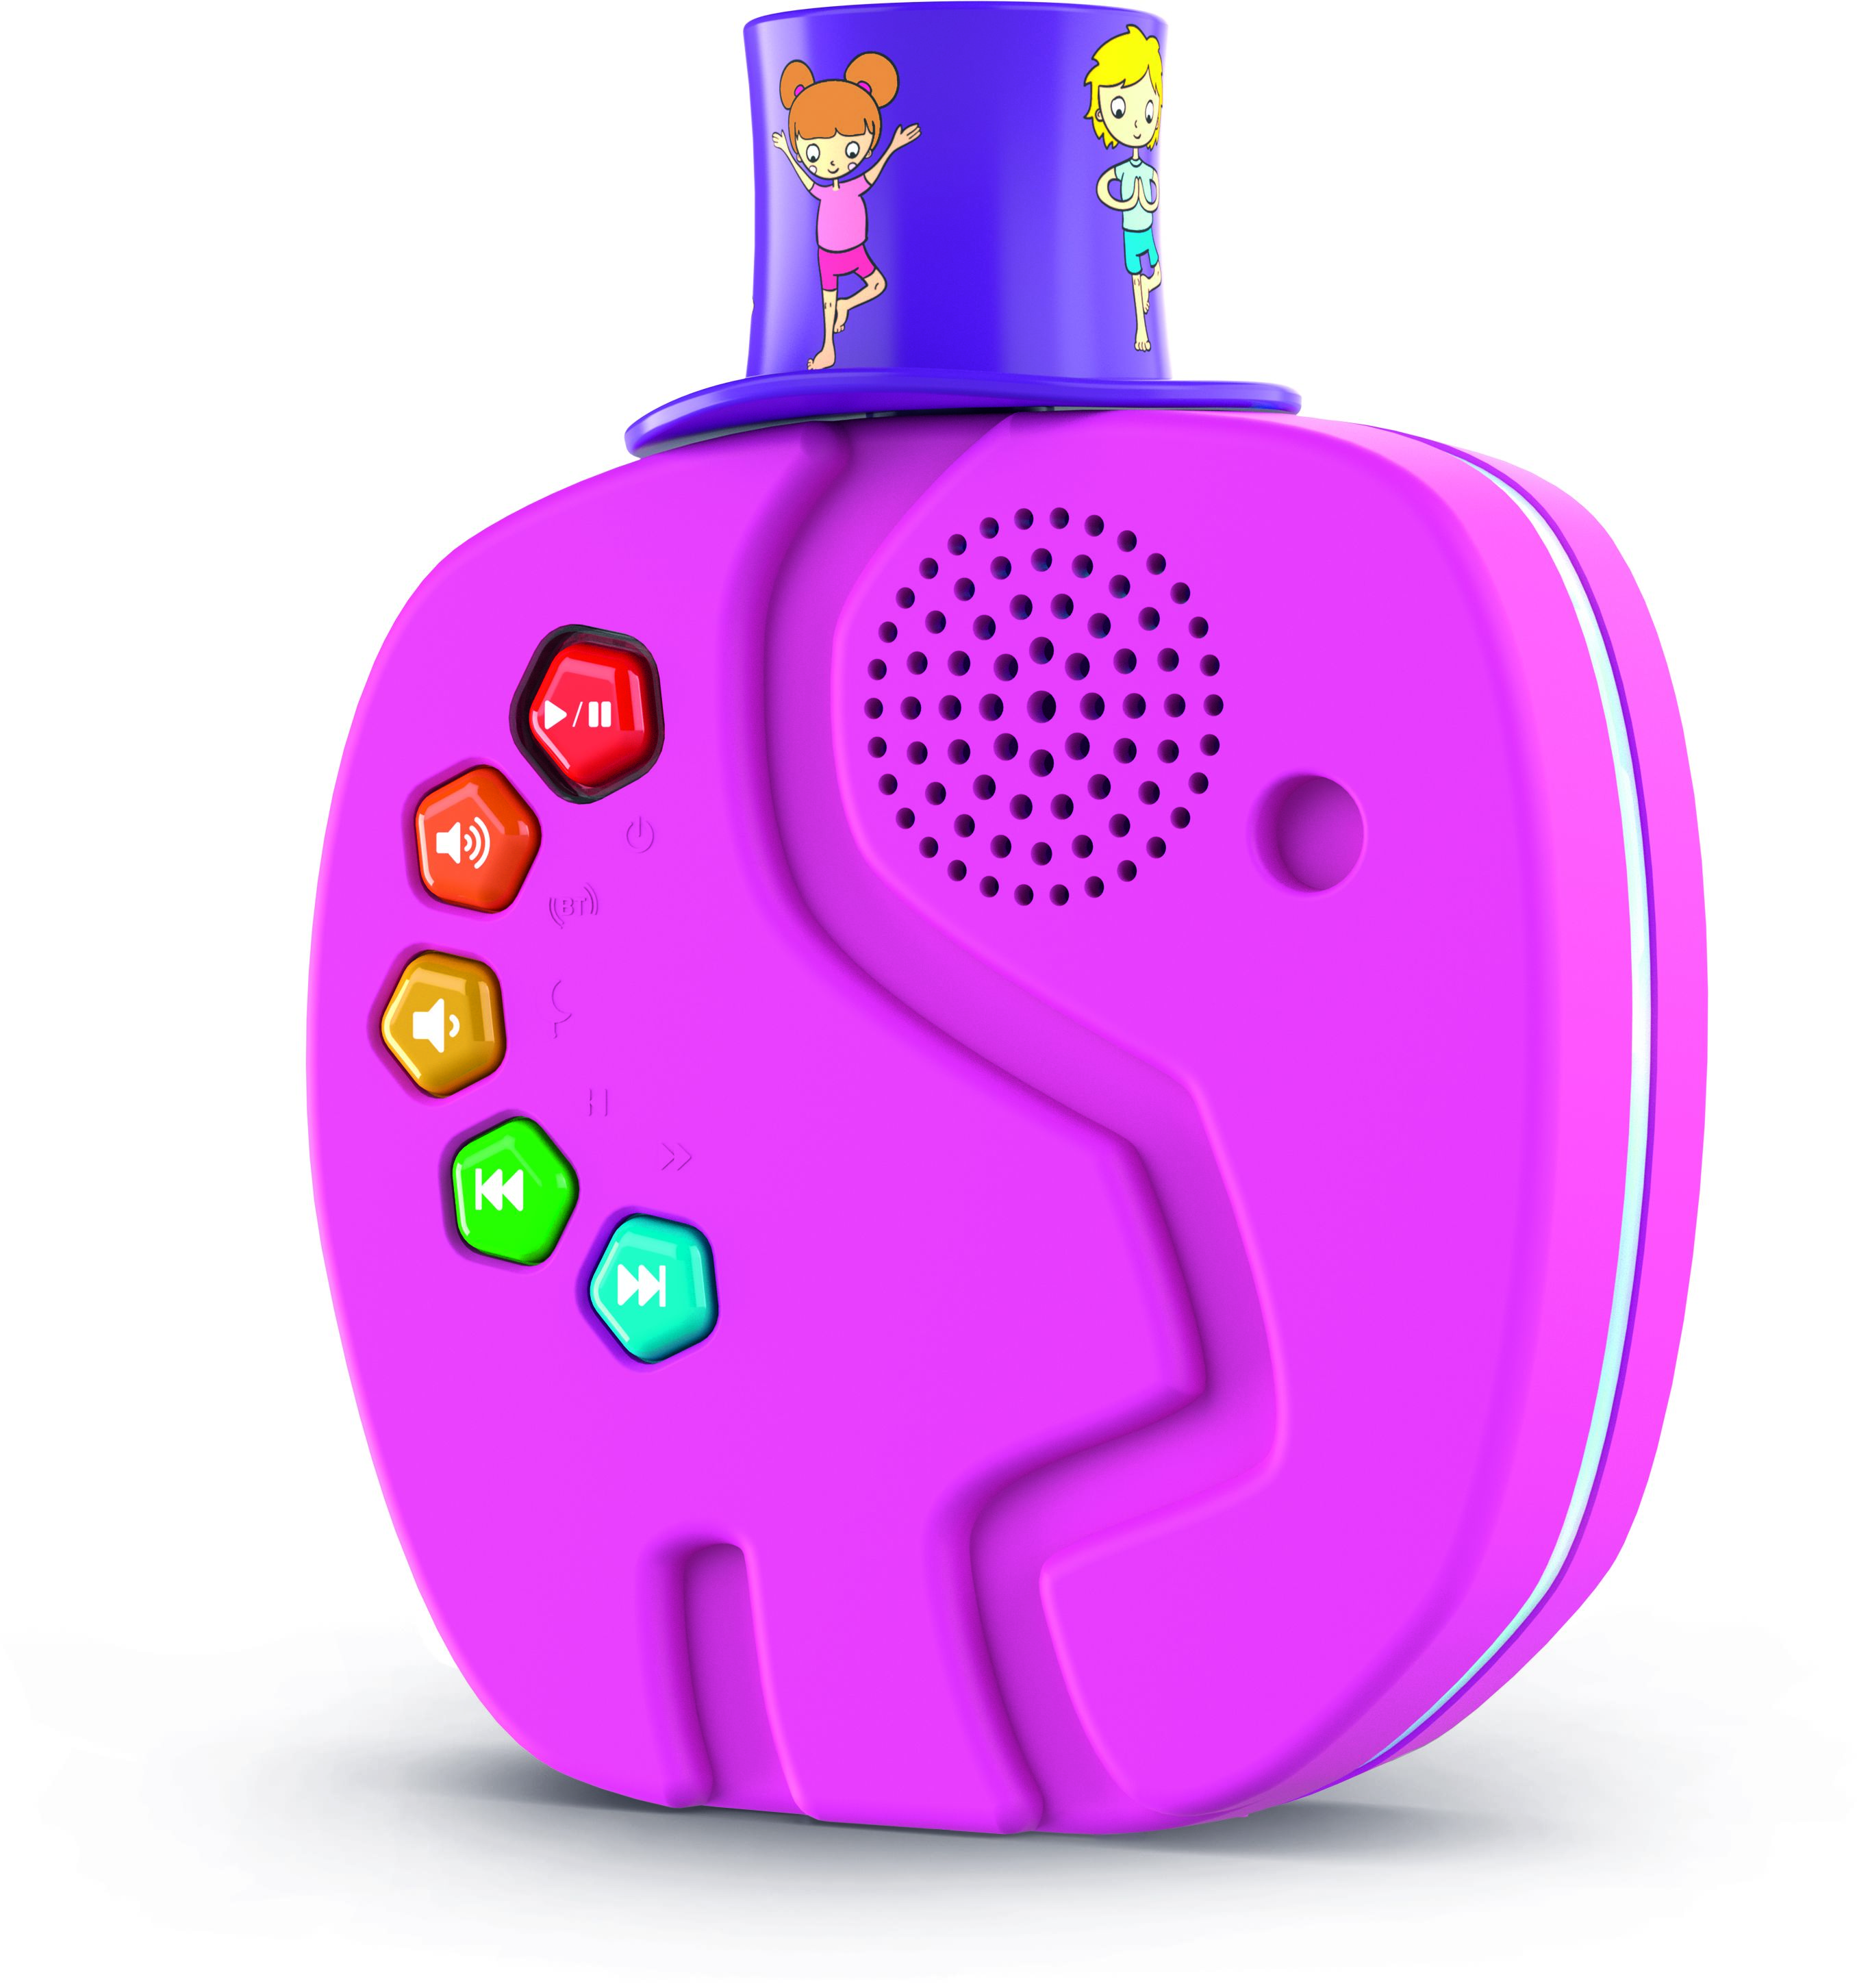 Audioplayer im für Kinder TECHNIFANT-Look, TECHNIFANT Pink TECHNISAT